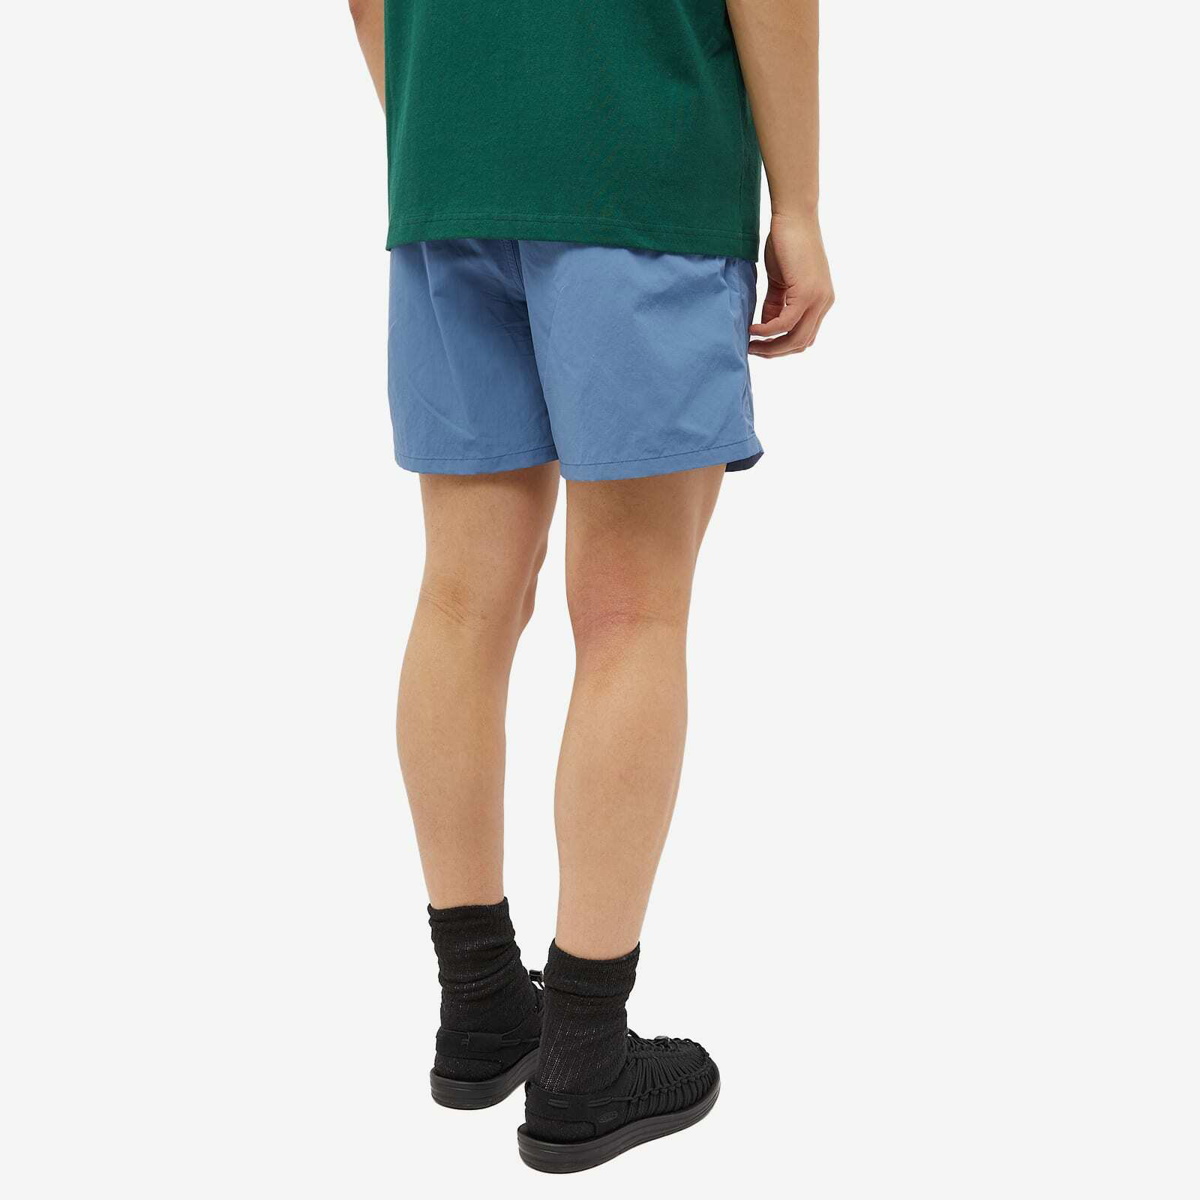 5-inch Nylon Shorts Green by Goldwin